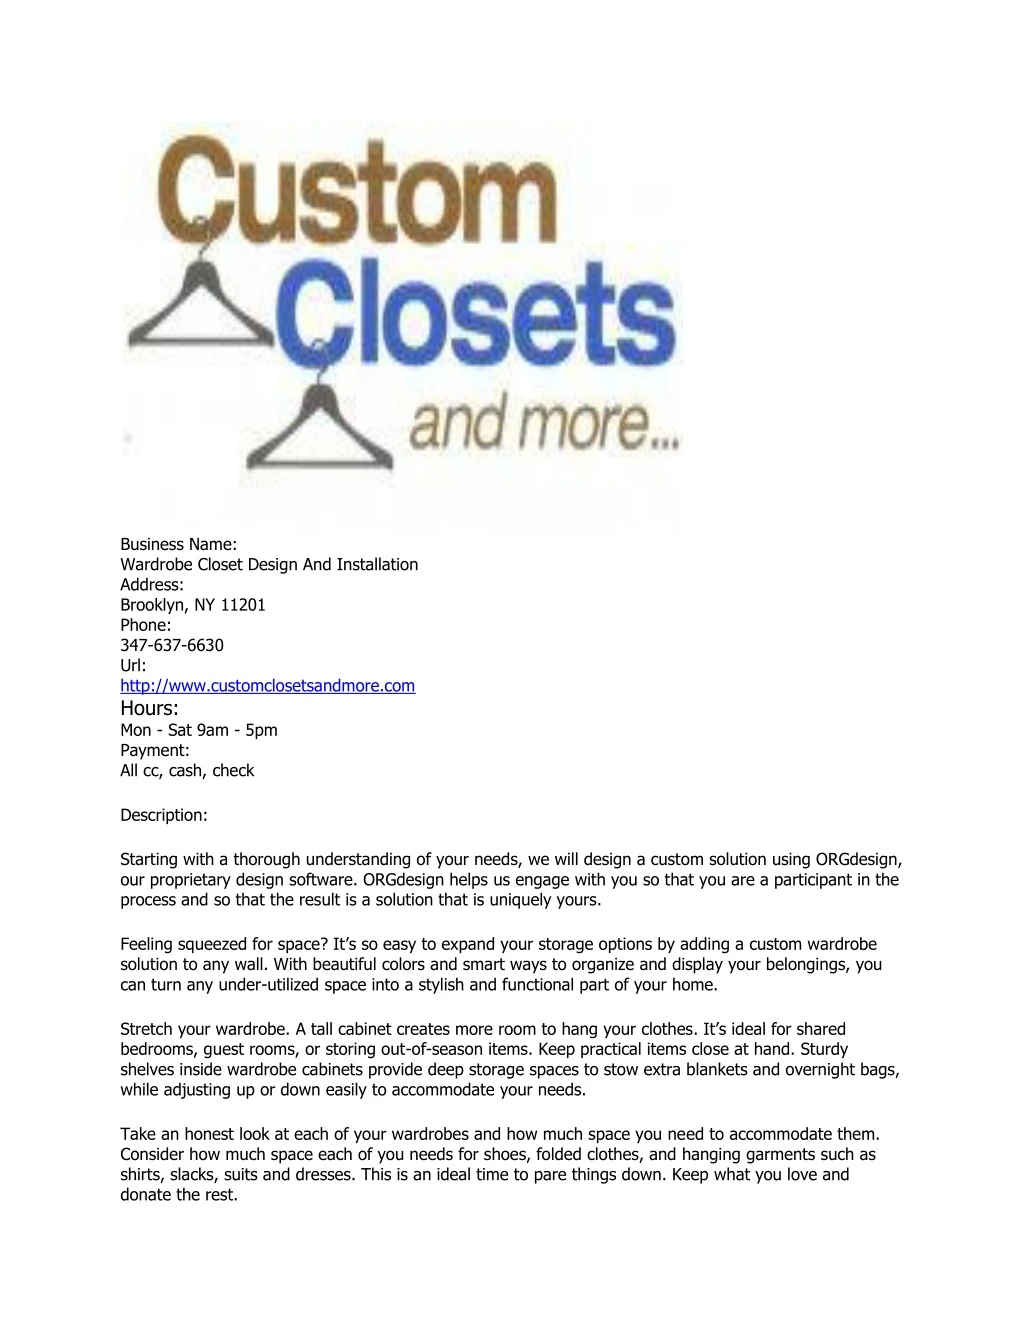 business name wardrobe closet design